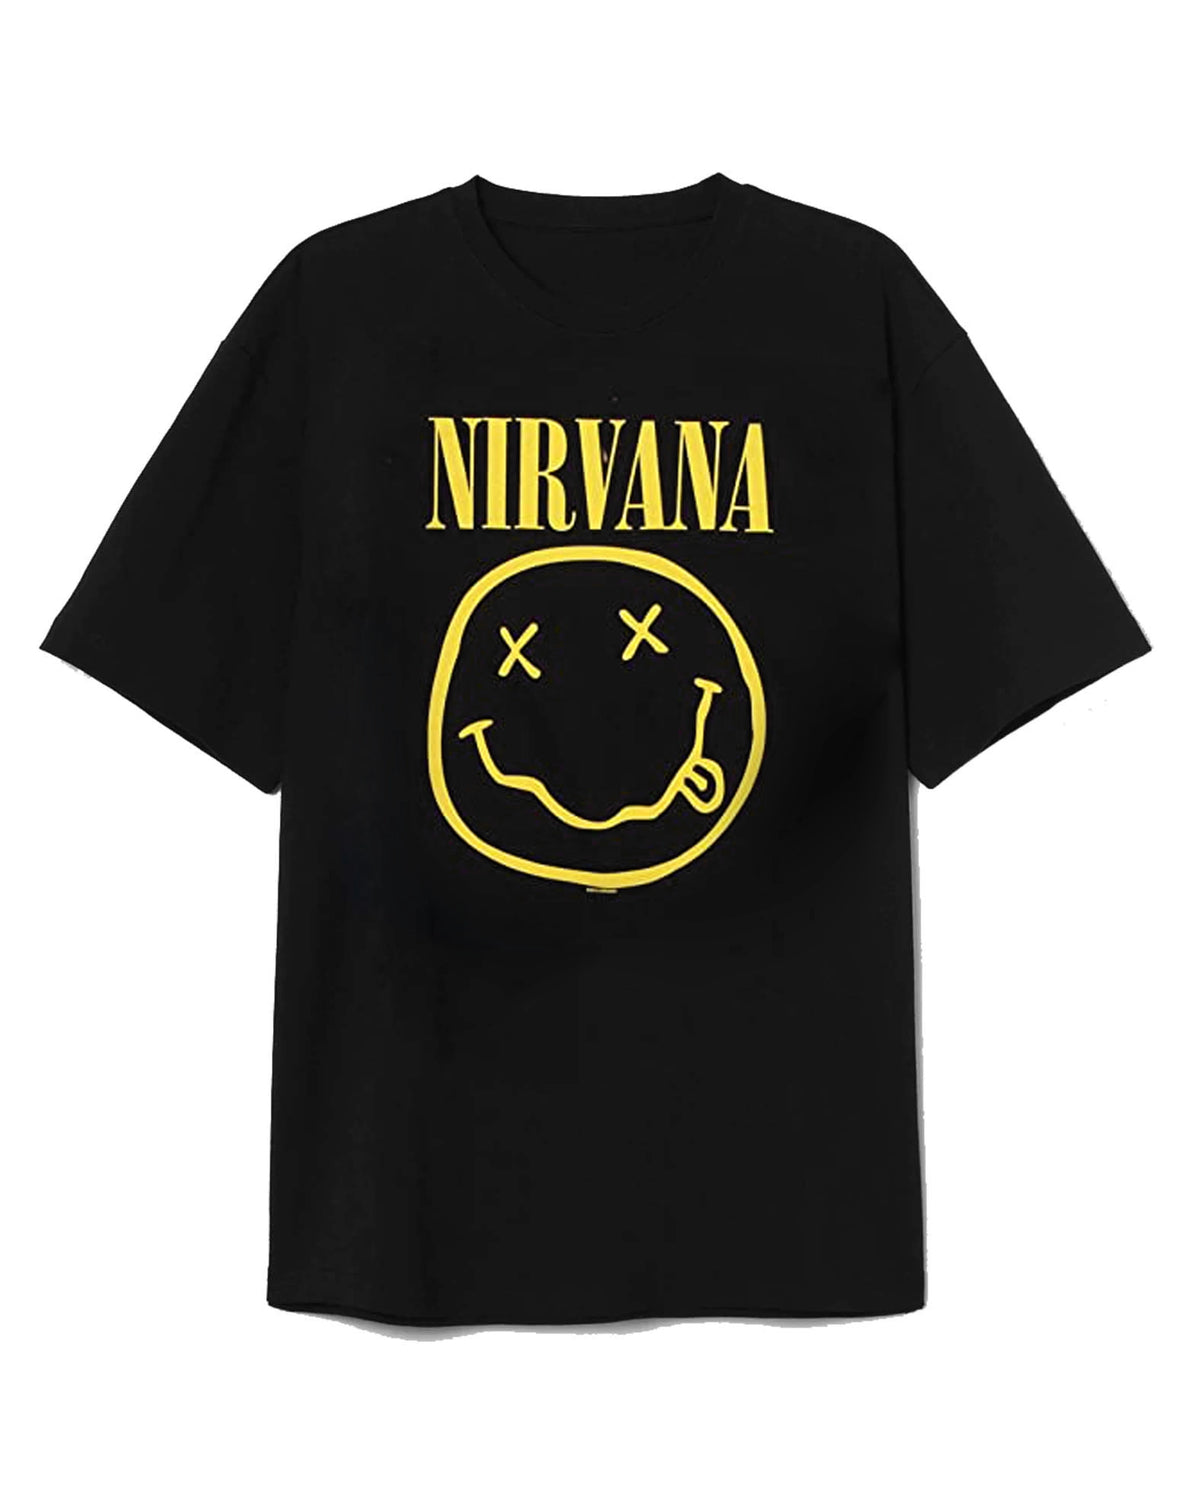 Bandshirt, Nirvana, Happy Face